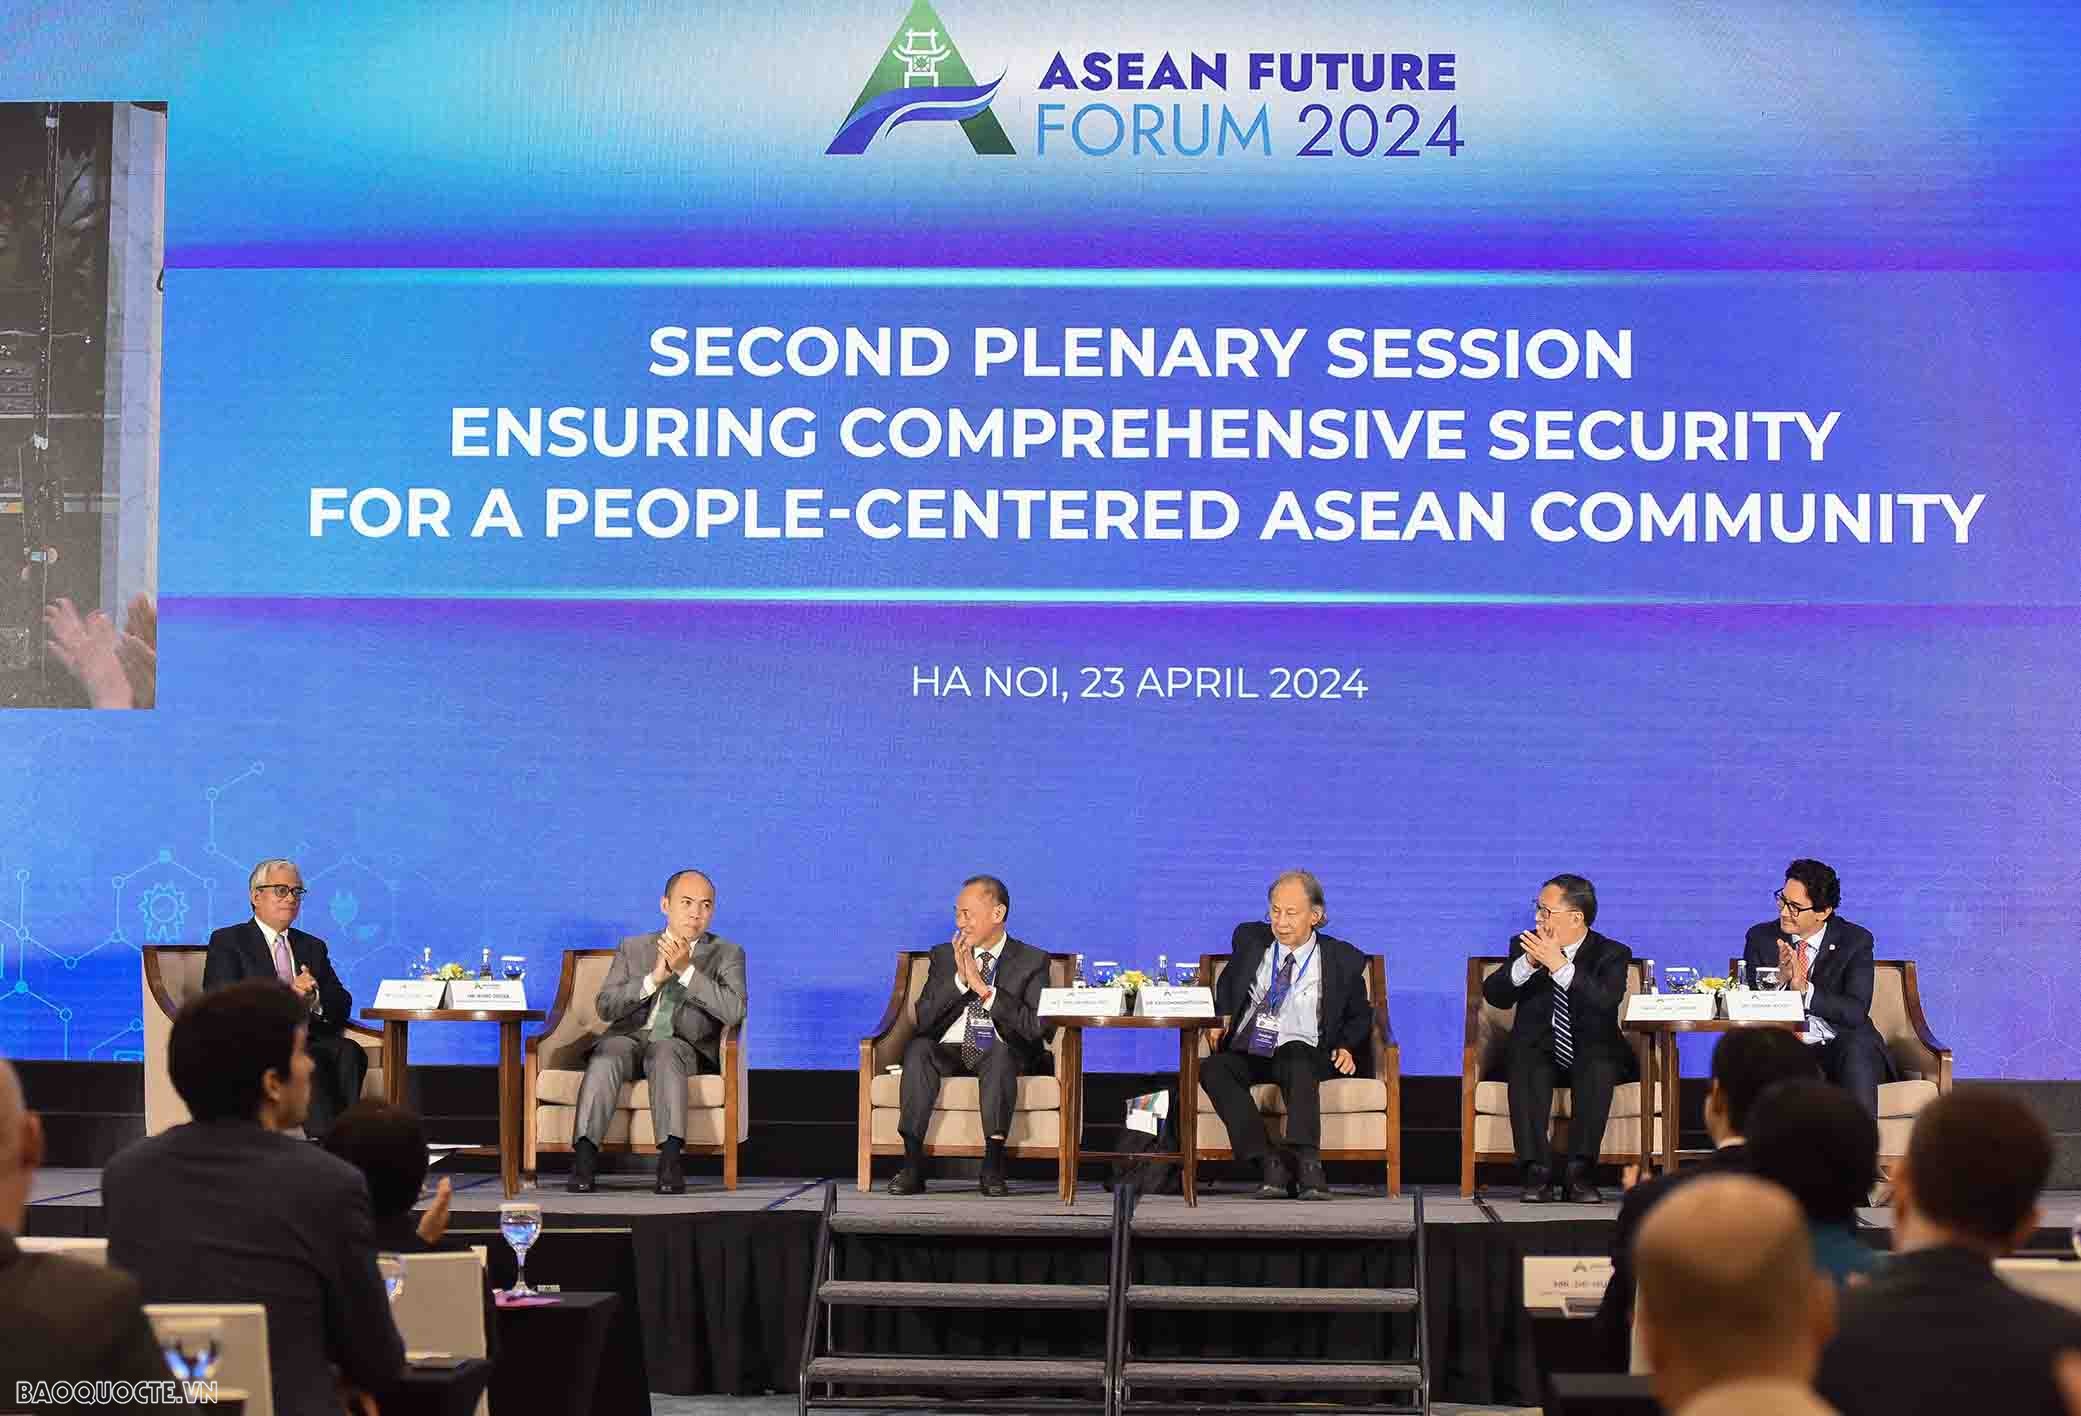 ASEAN Future Forum 2024 Second session discussed ways to ensure